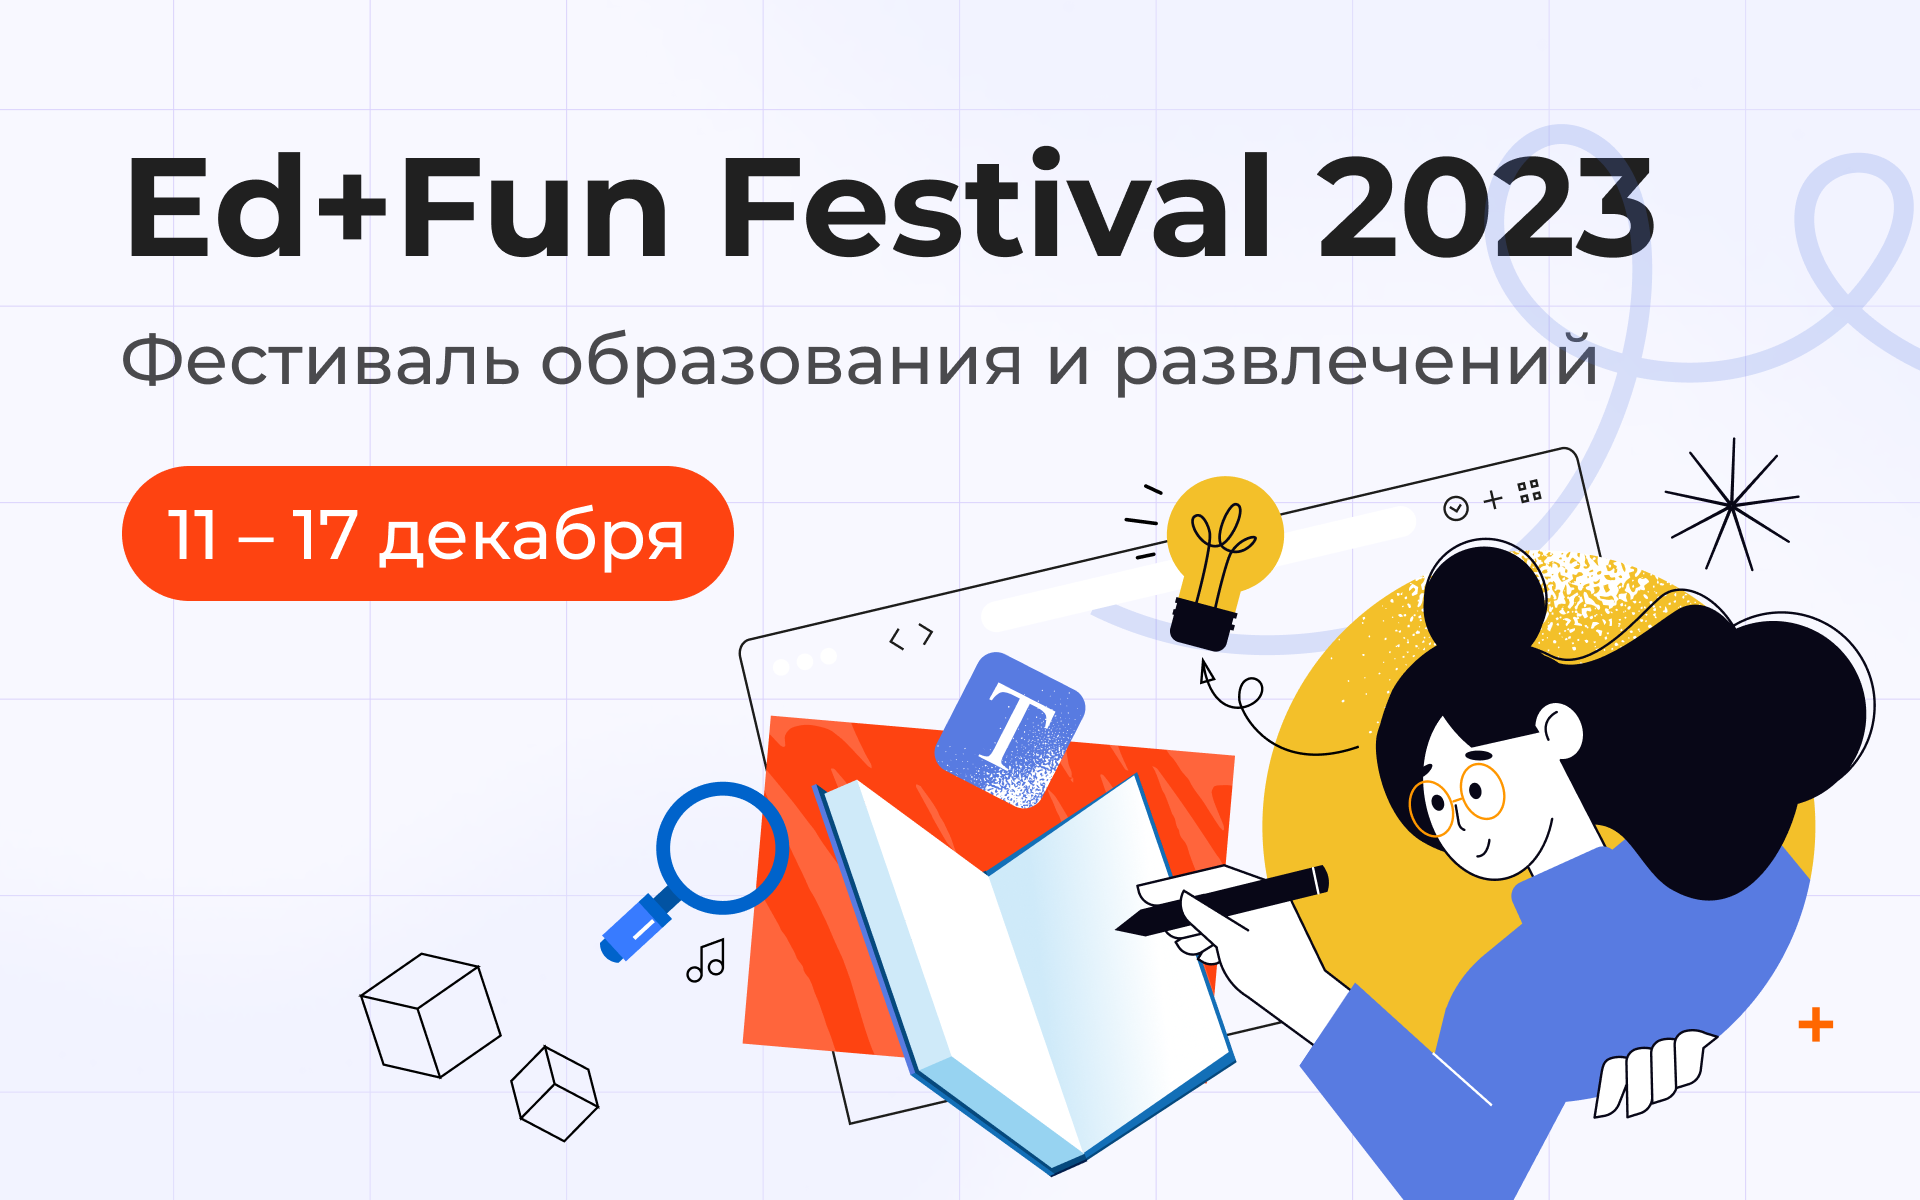 Ed+Fun Festival 2023 — образование и развлечение в одном флаконе!